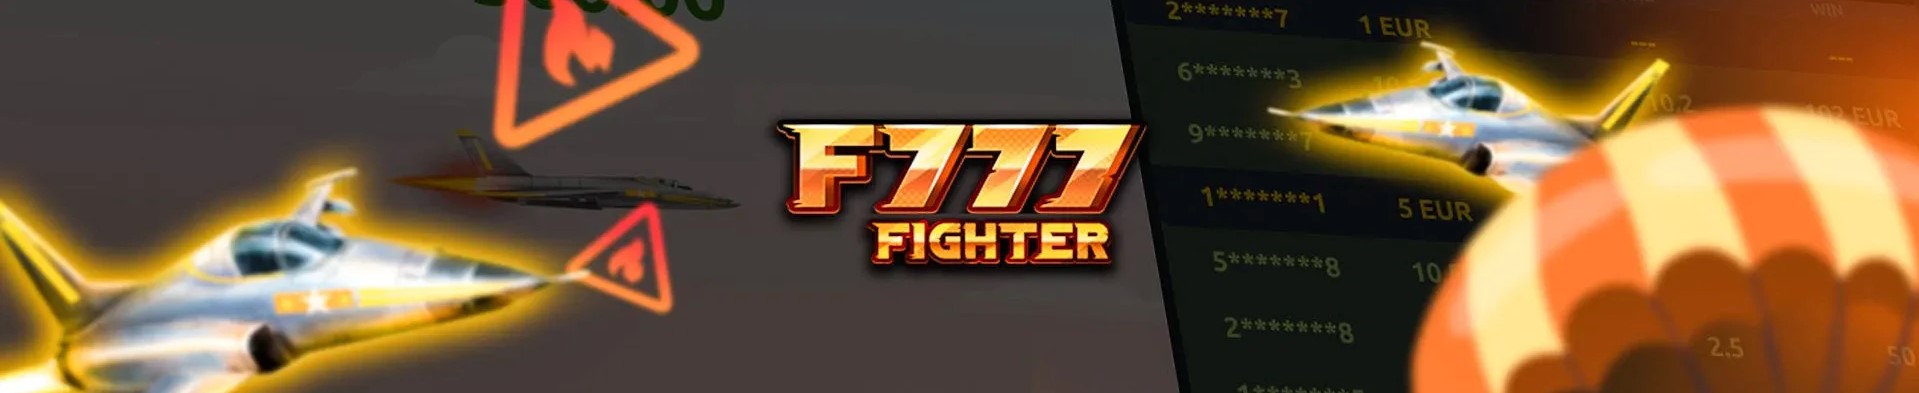 F777 fighter گیم۔